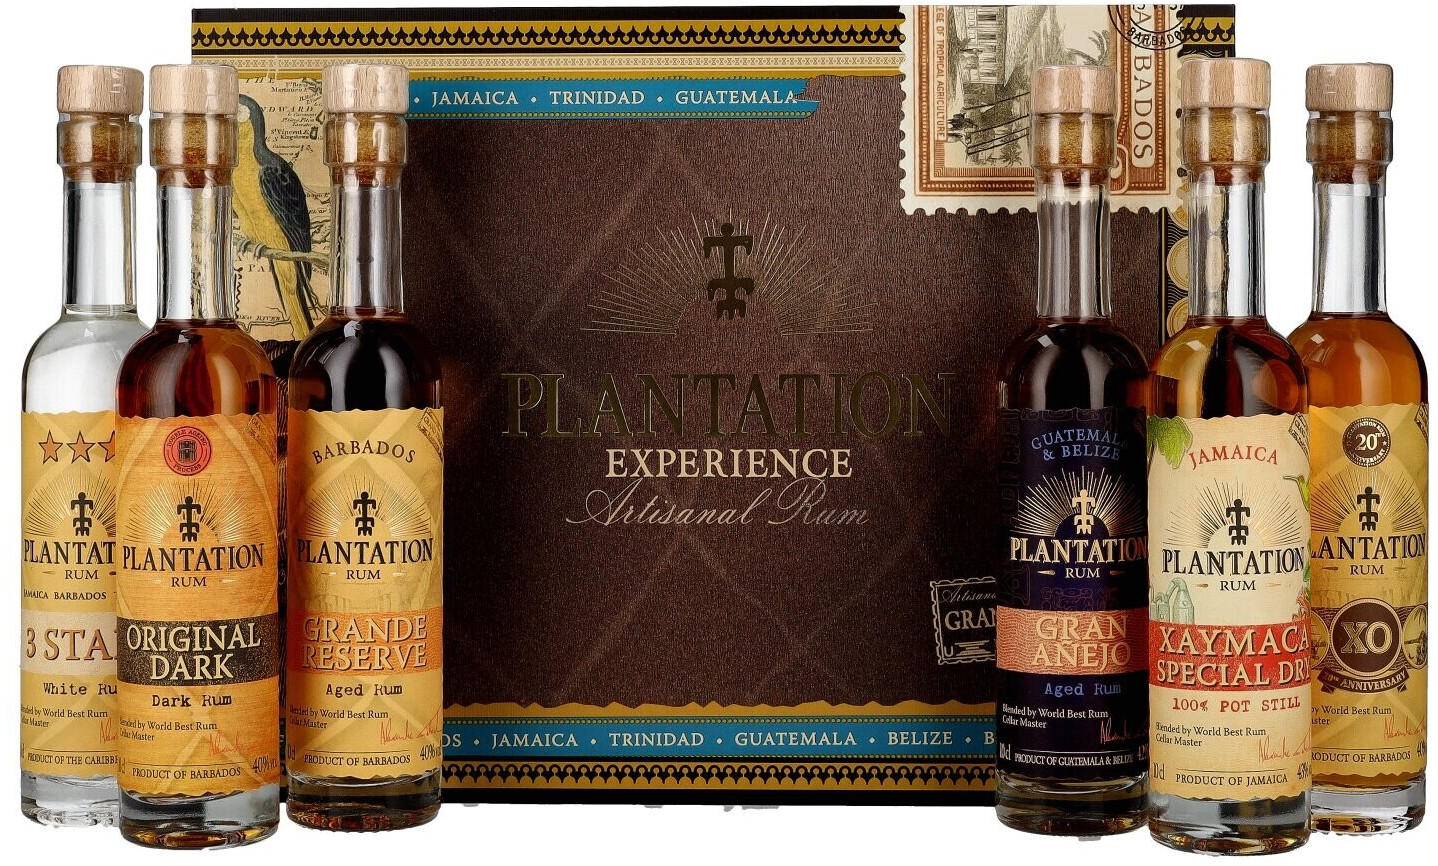 | 41,49 Plantation Experience 41% Rum Preisvergleich ab 6x0,1l Artisanal € Box bei